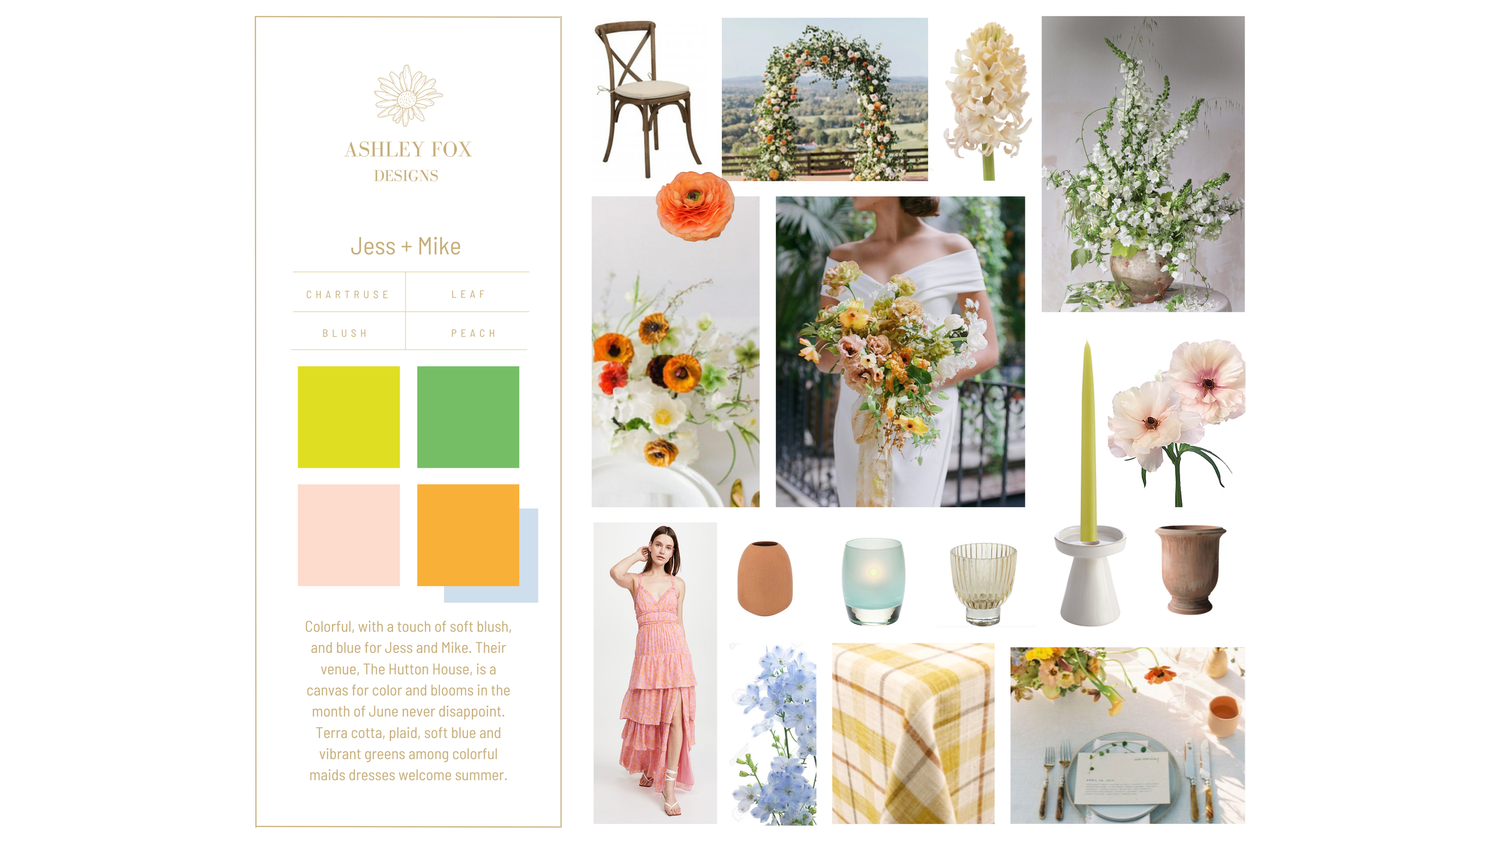 Jess + Mike Gallery - Ashley Fox Designs Wedding Flowers Minnesota